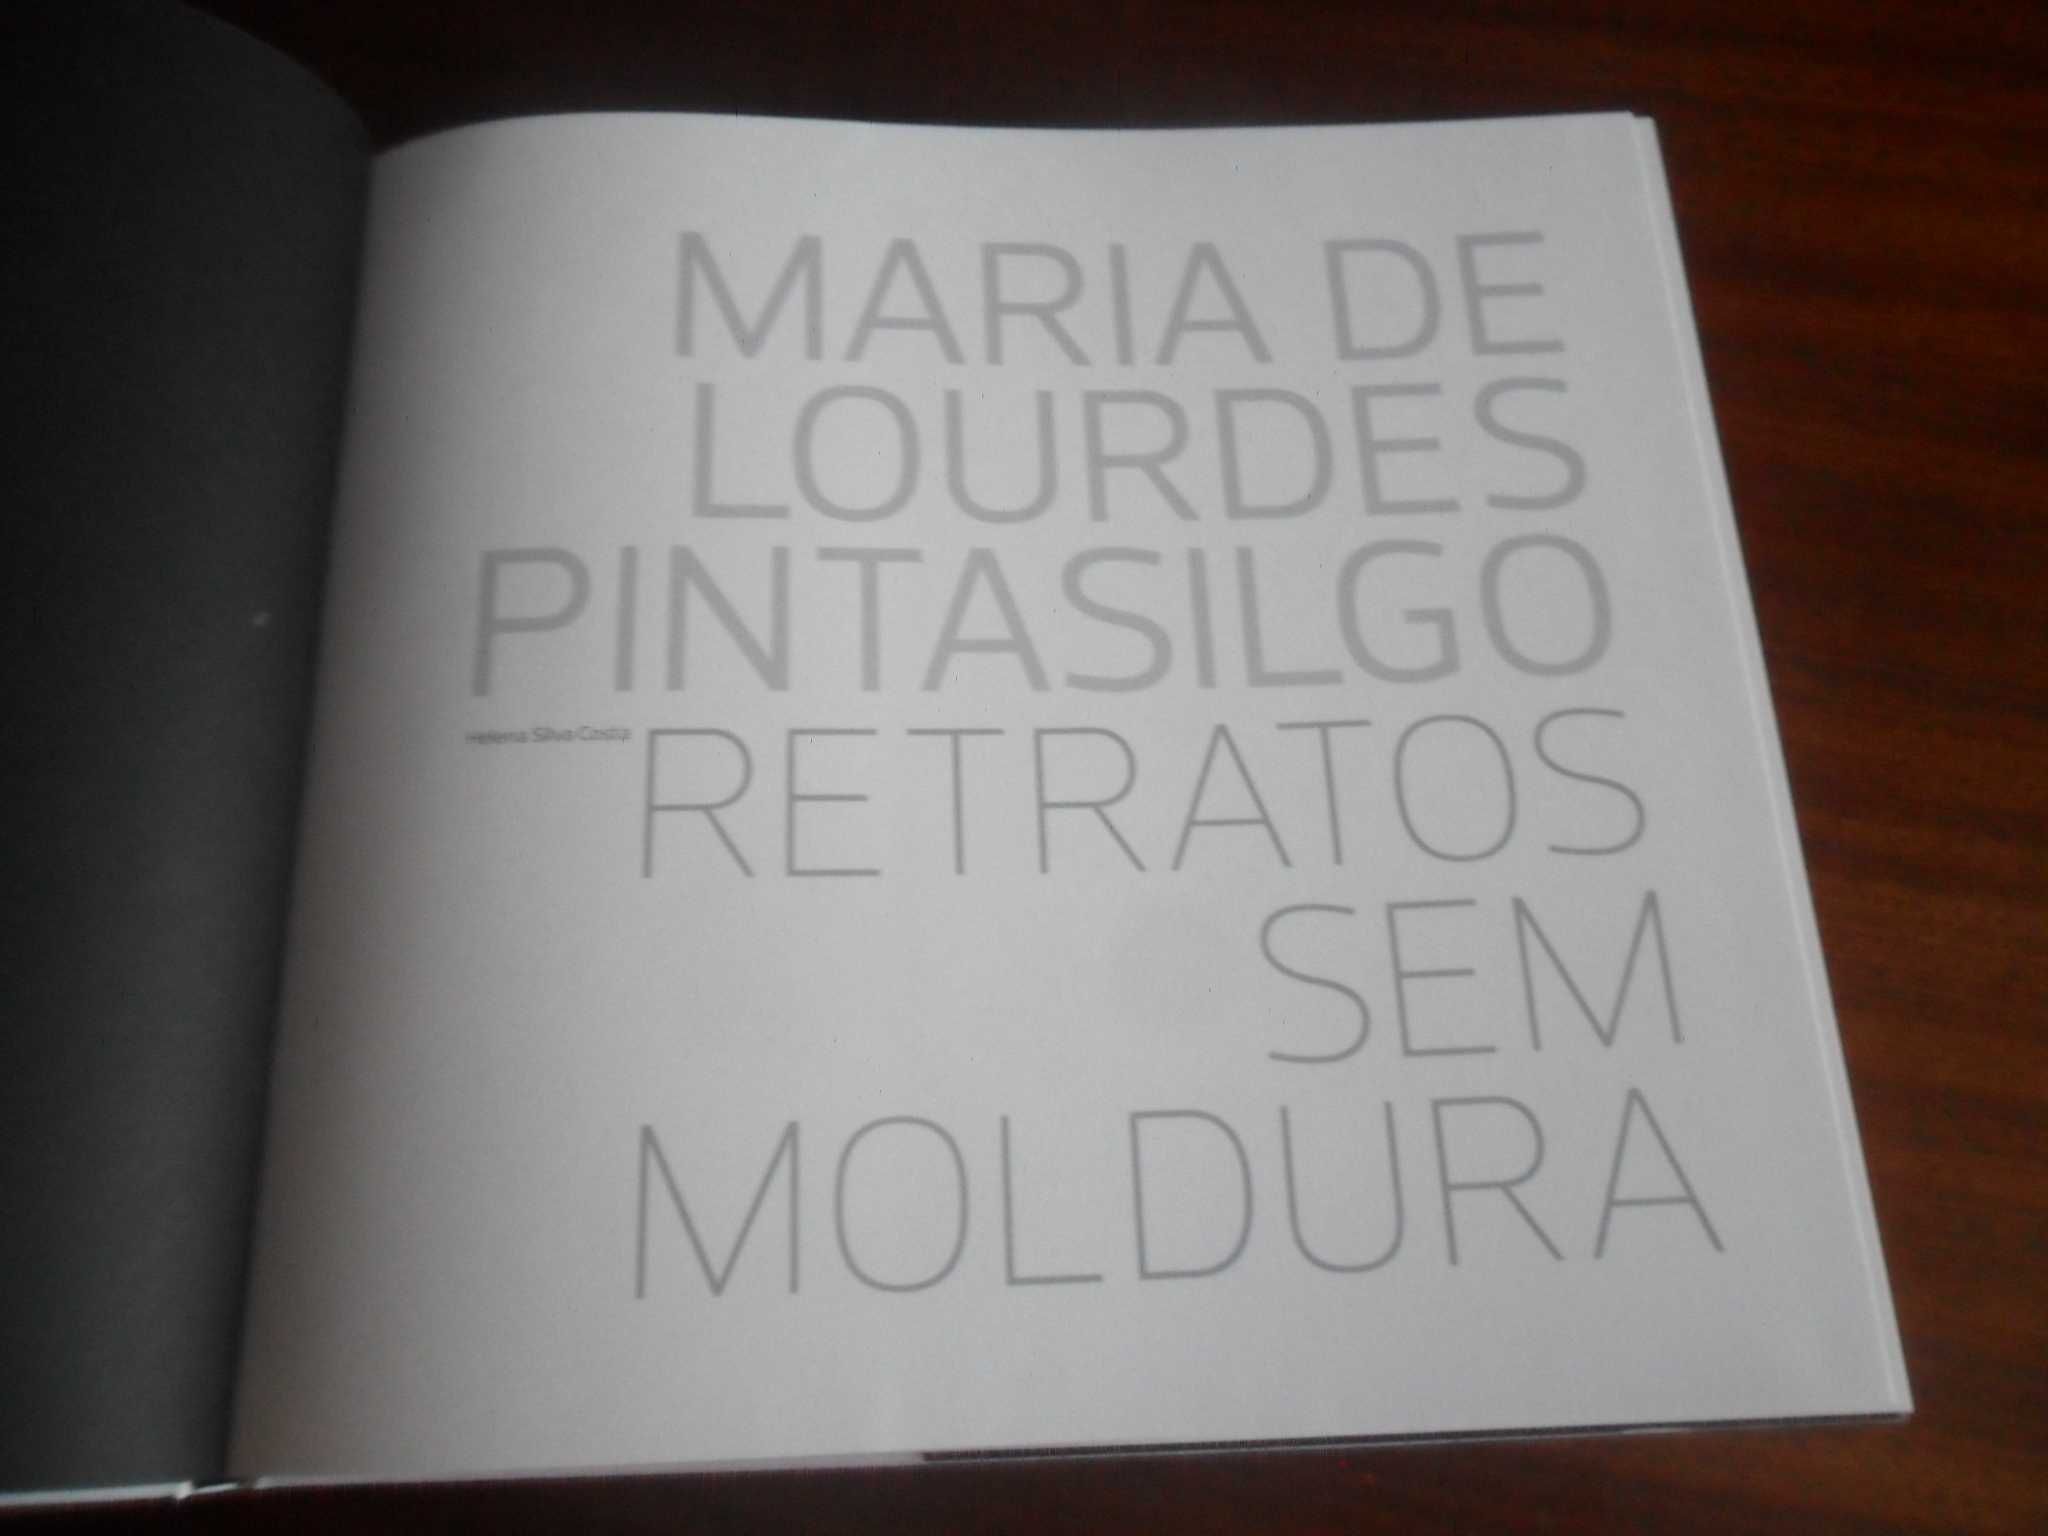 "Maria de Lourdes Pintasilgo, Retratos sem Moldura" de Helena S. Costa